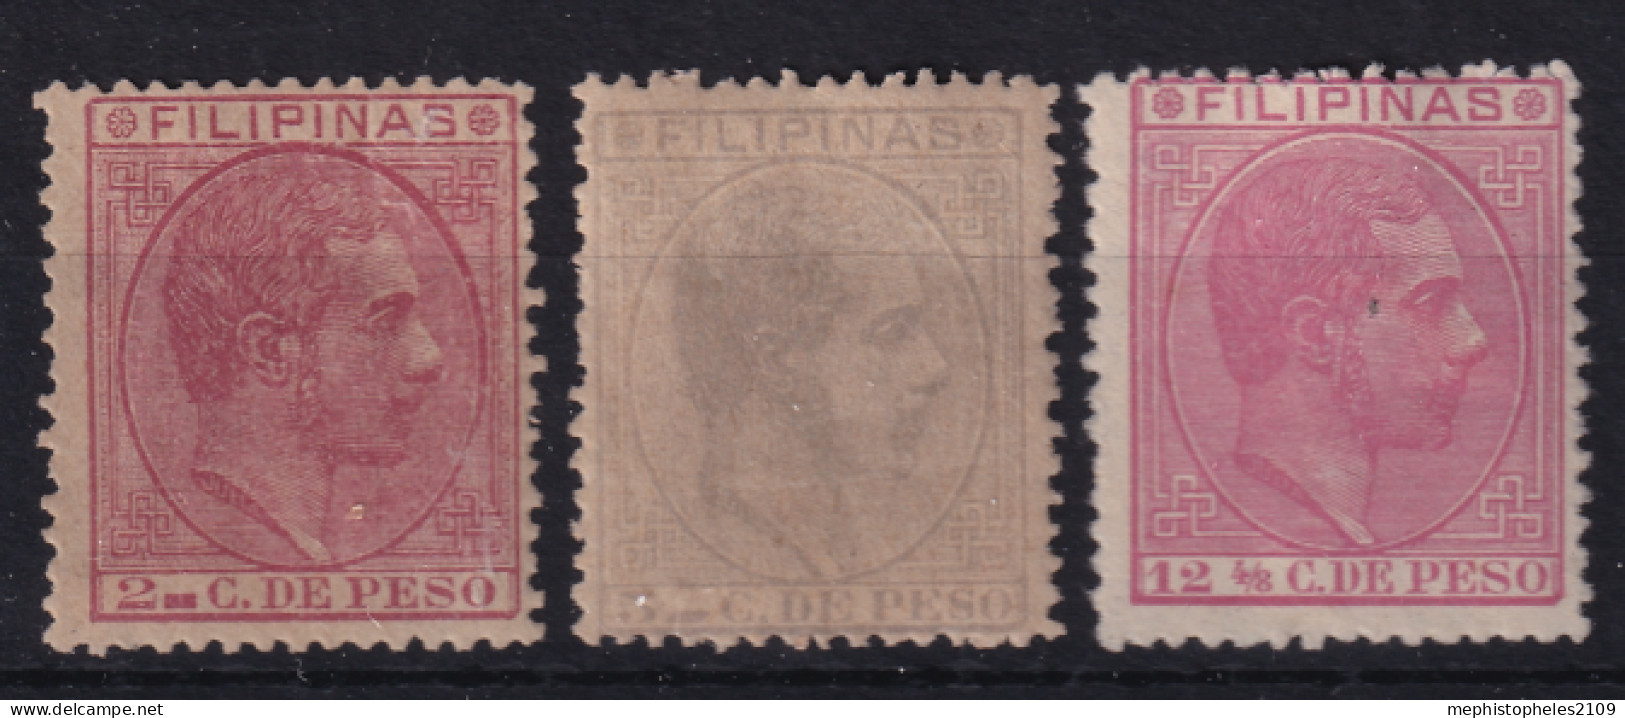 PHILIPPINES 1880/86 - MLH - Sc# 76, 81, 86 - Filipinas